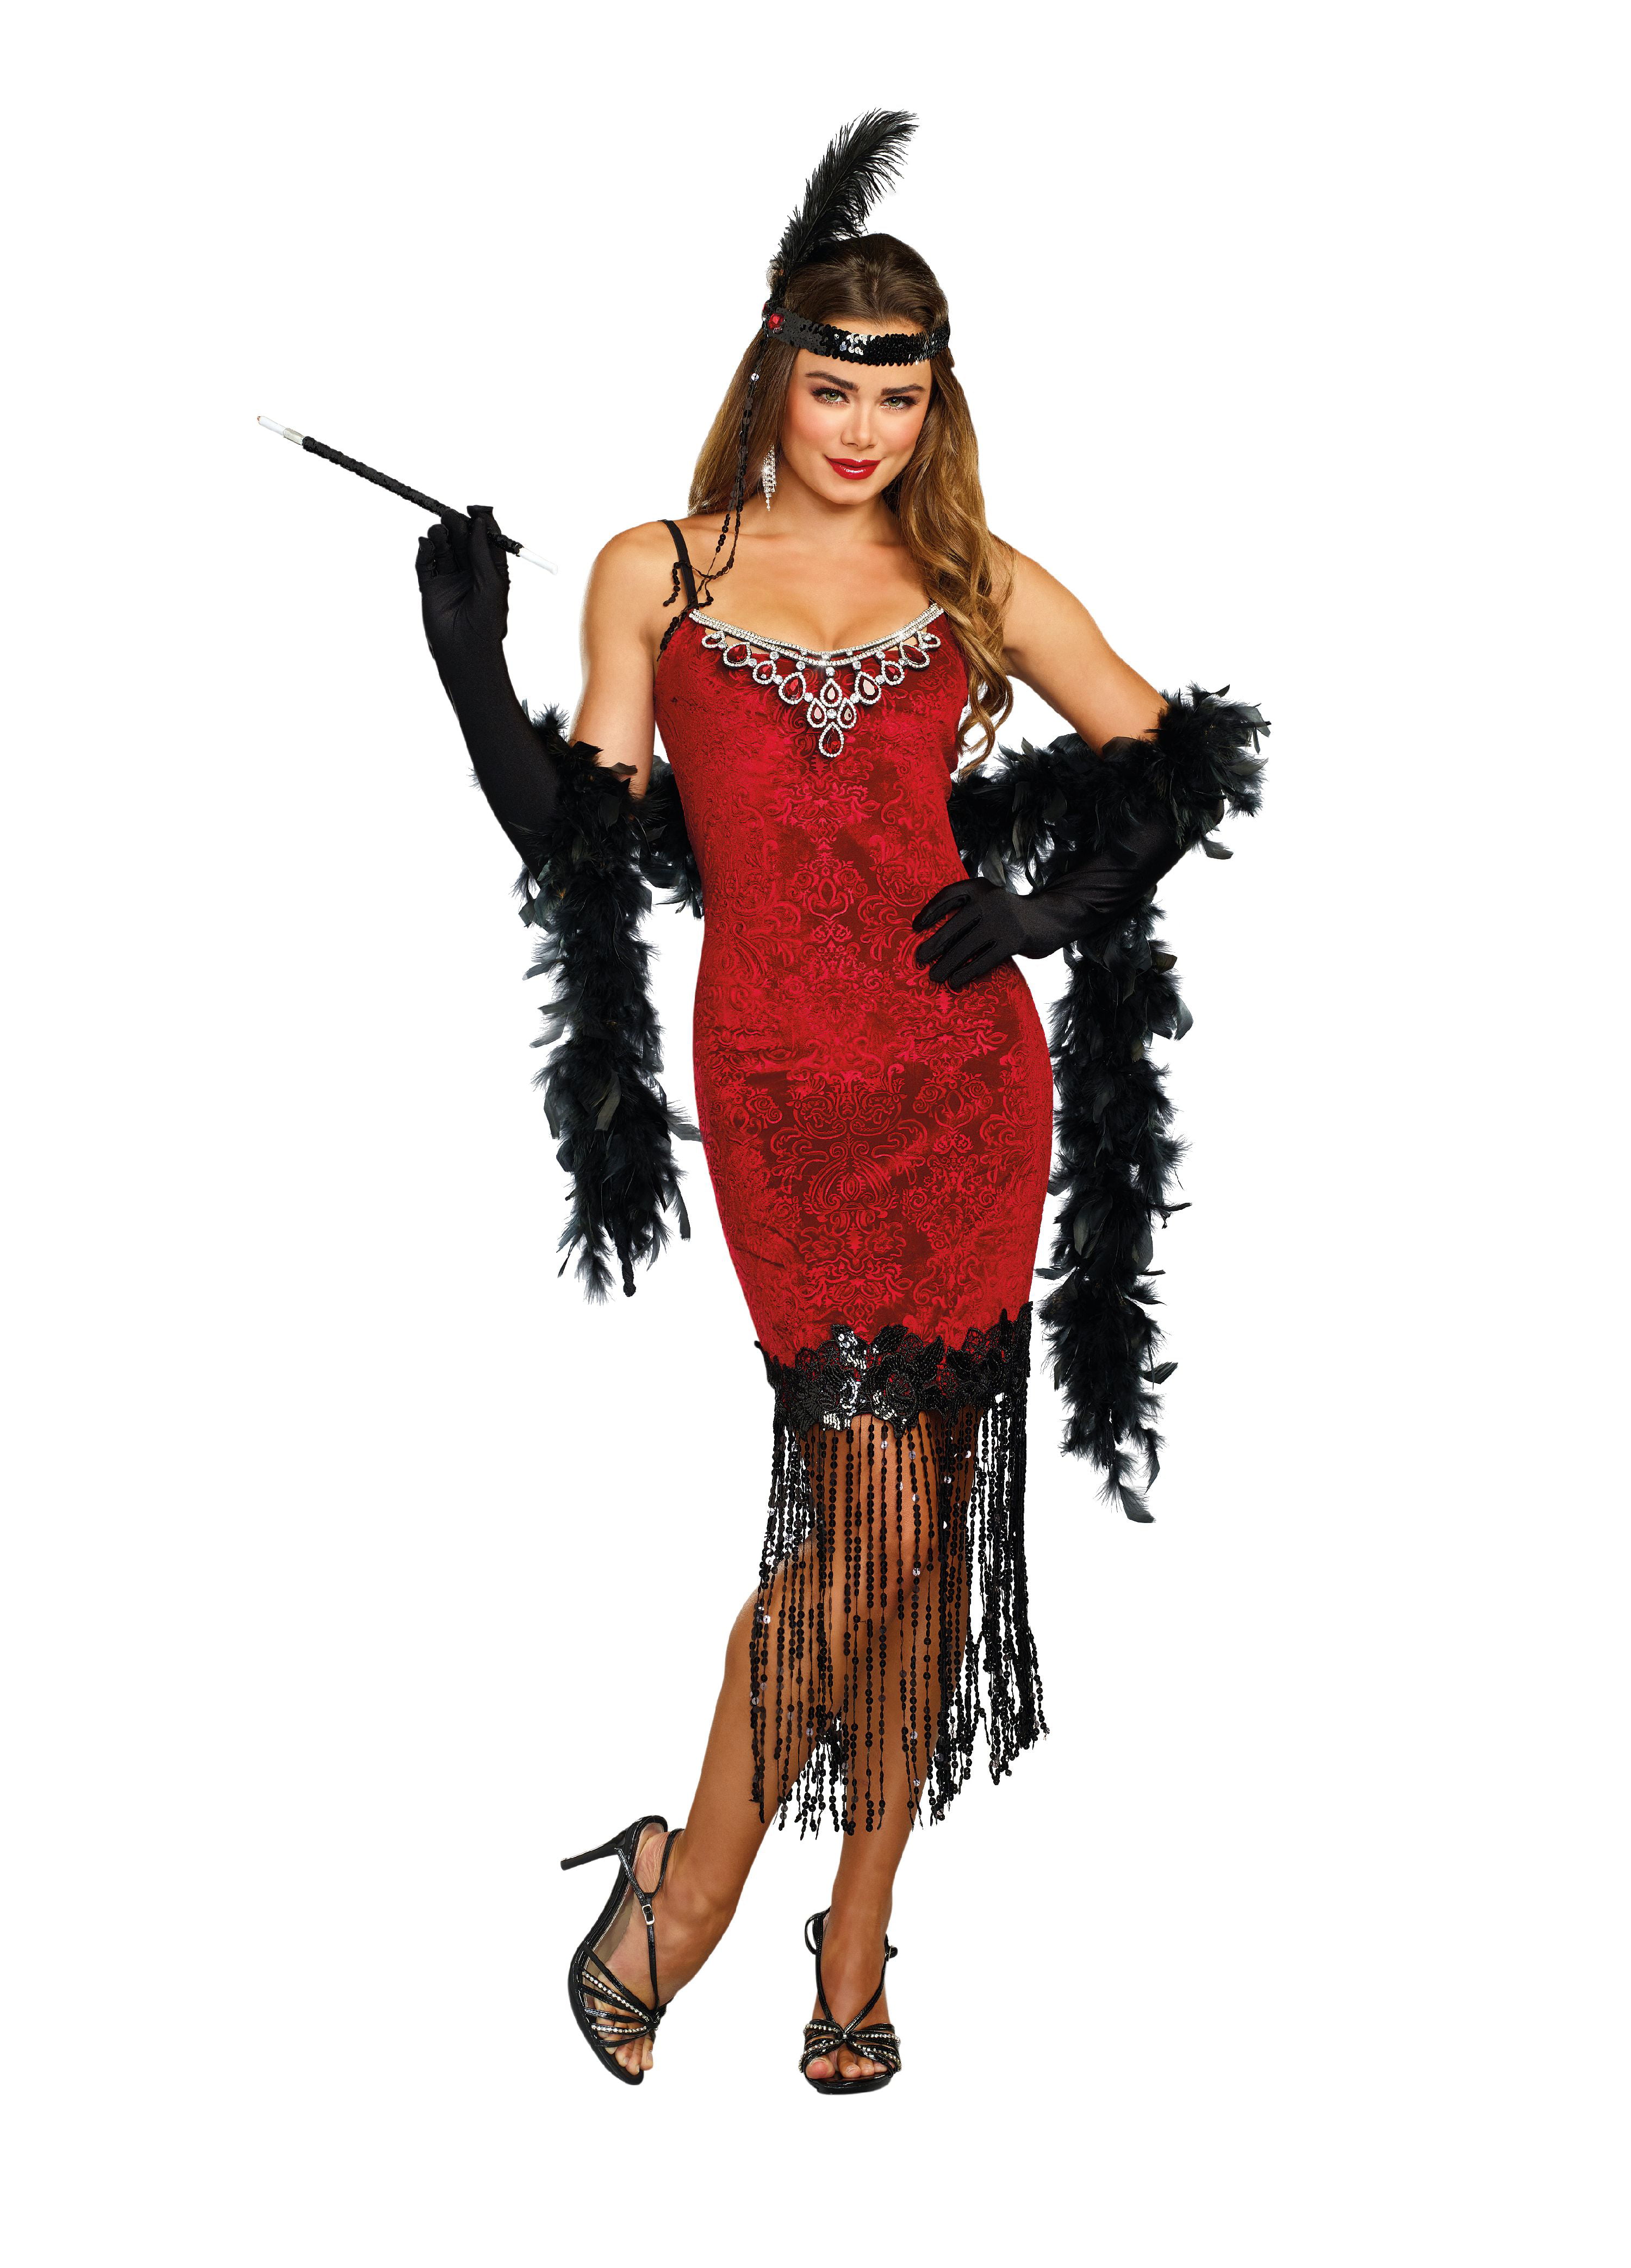 Details about   Elegant Moments adult female flapper costume dress